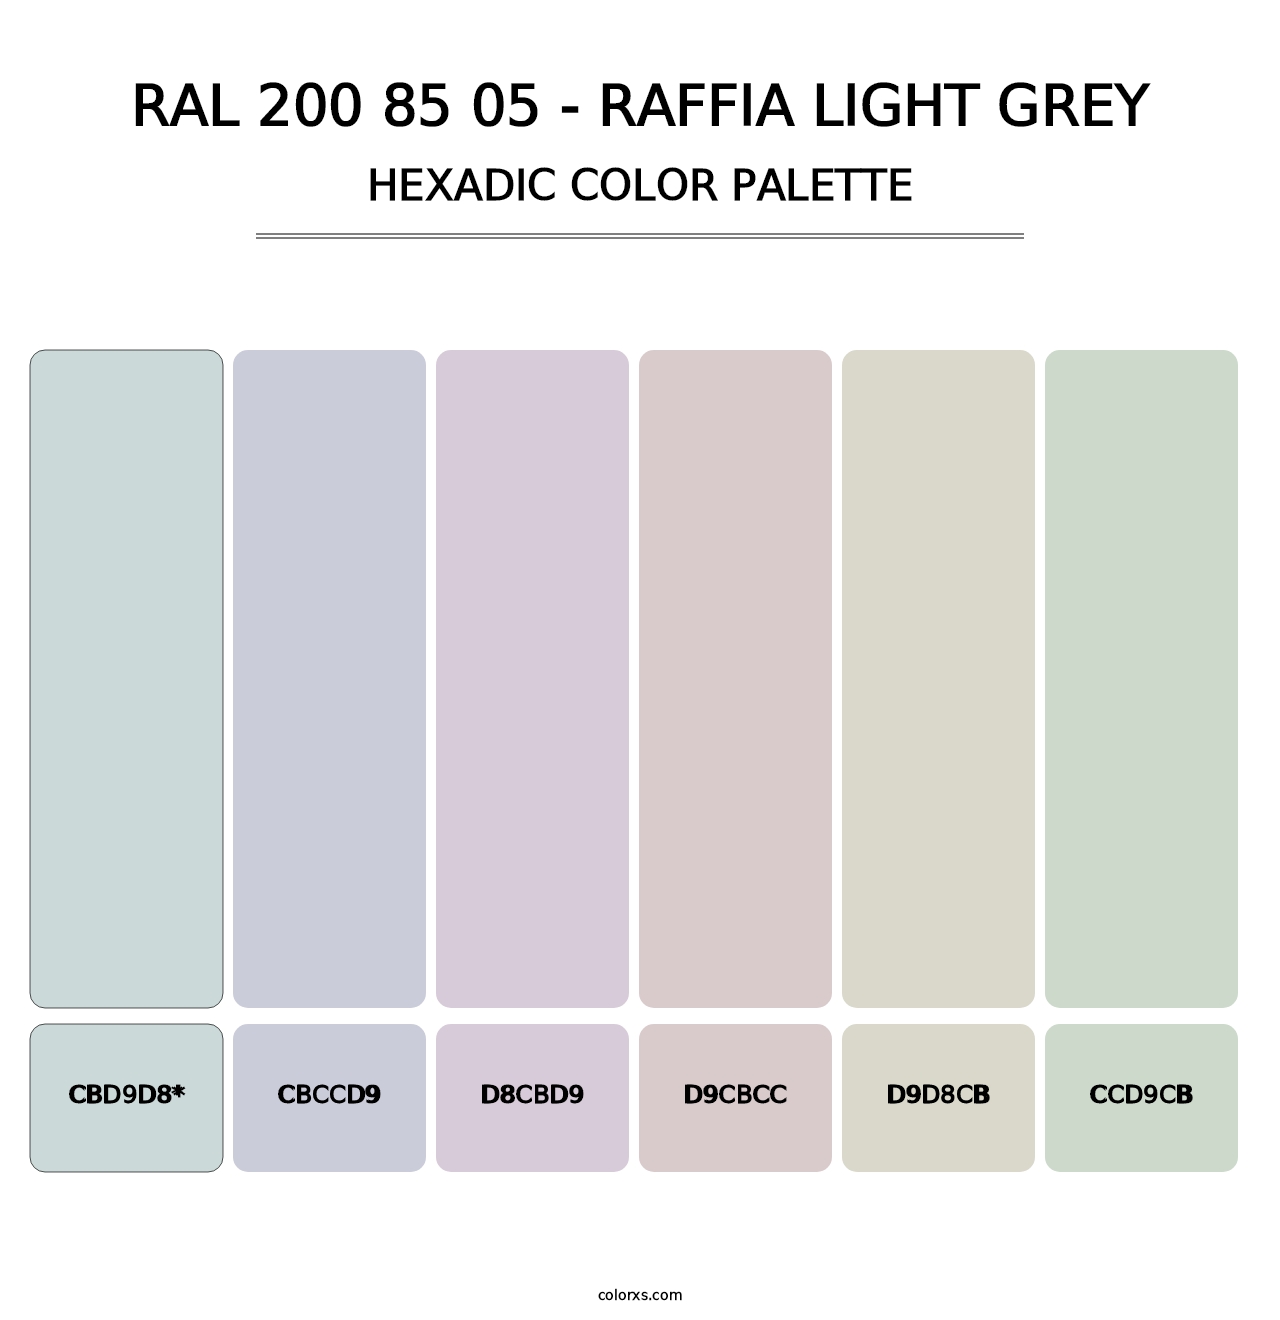 RAL 200 85 05 - Raffia Light Grey - Hexadic Color Palette